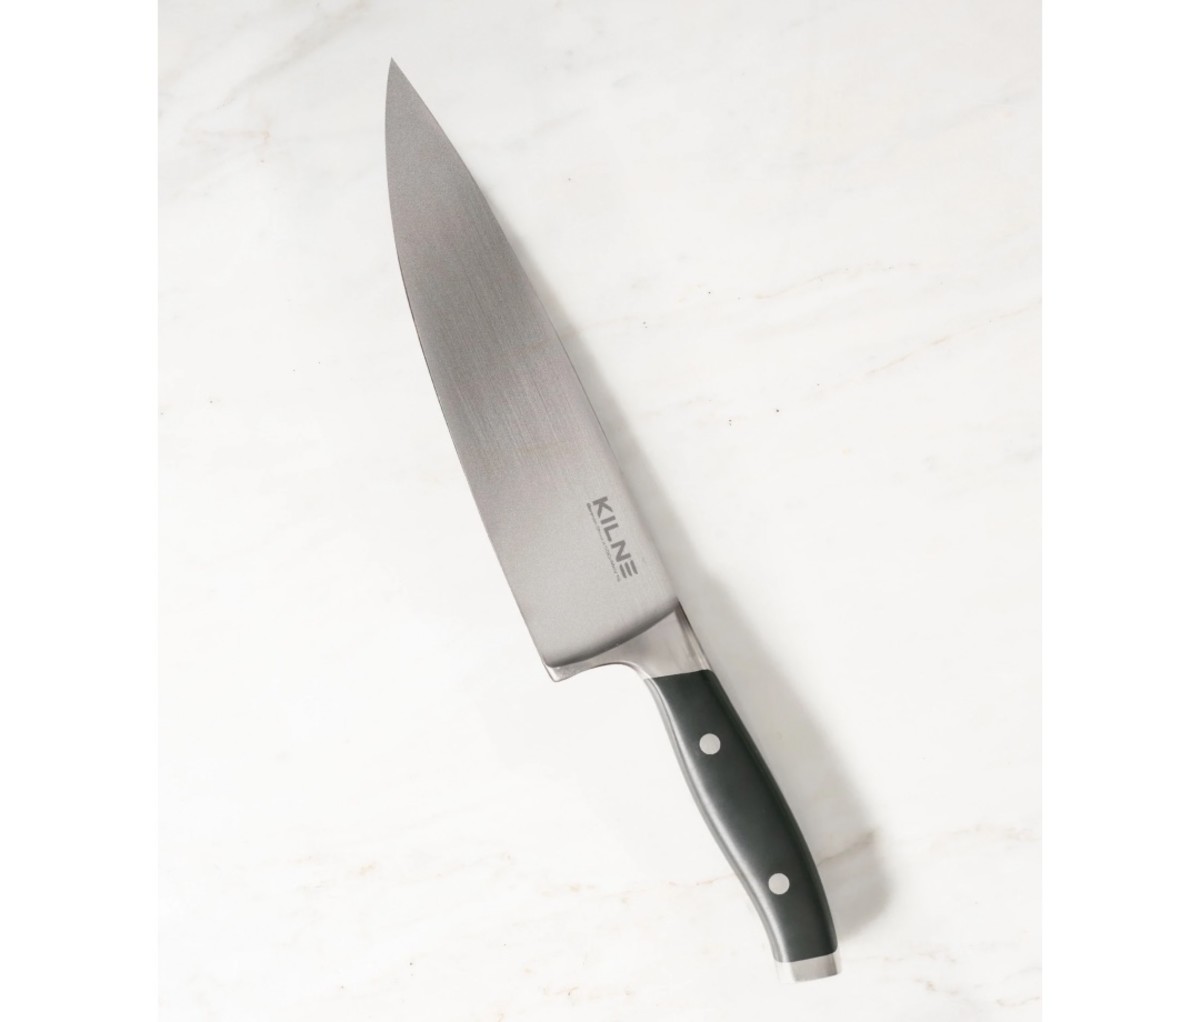 Superior Quality Emeril Lagasse Kitchen Knife Set with Ergonomic